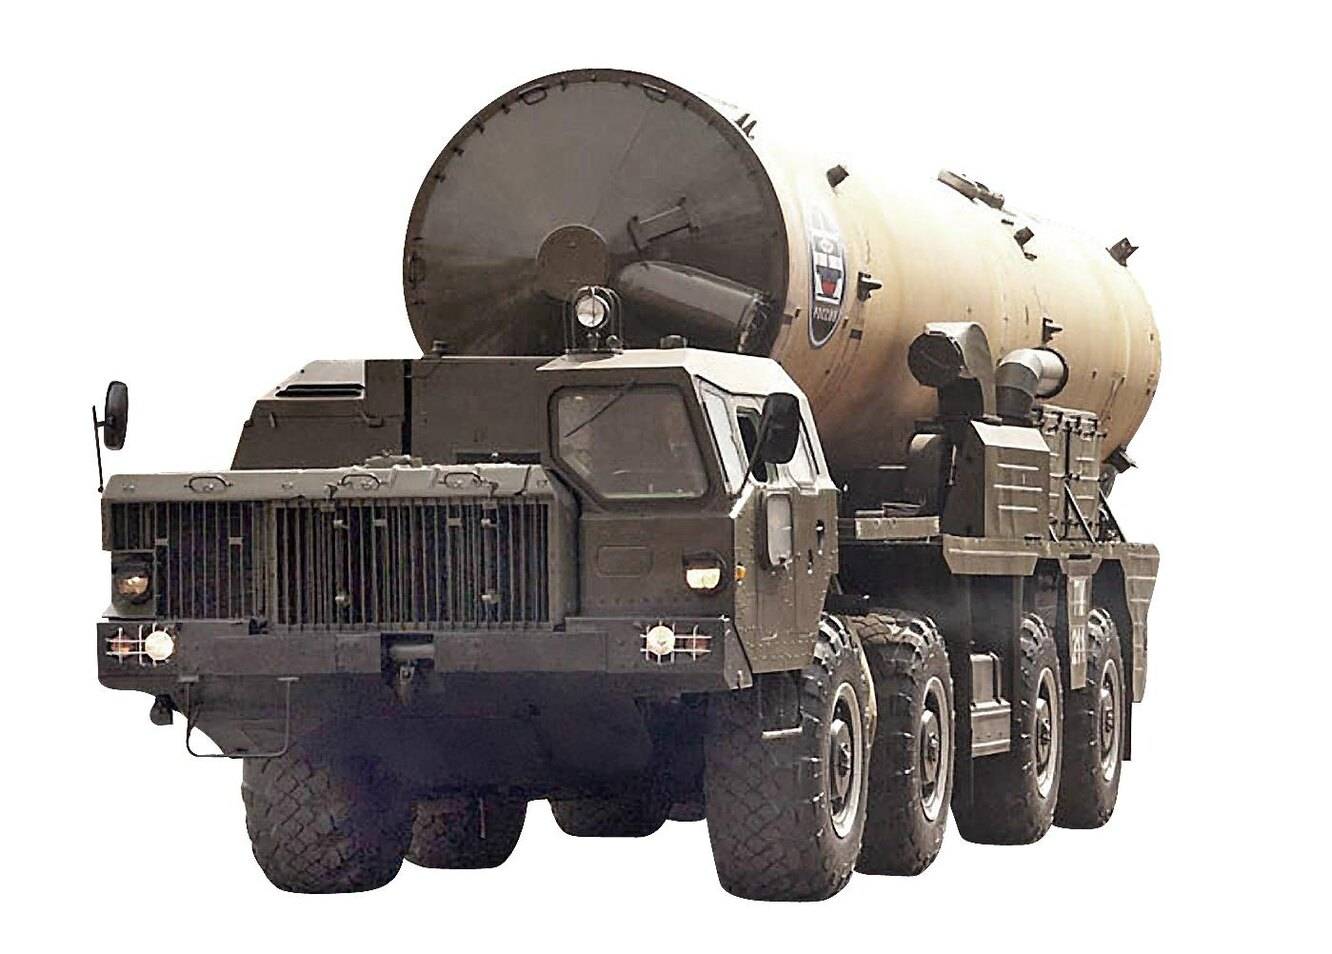 Зенитный ракетный комплекс а-135 - a-135 anti-ballistic missile system